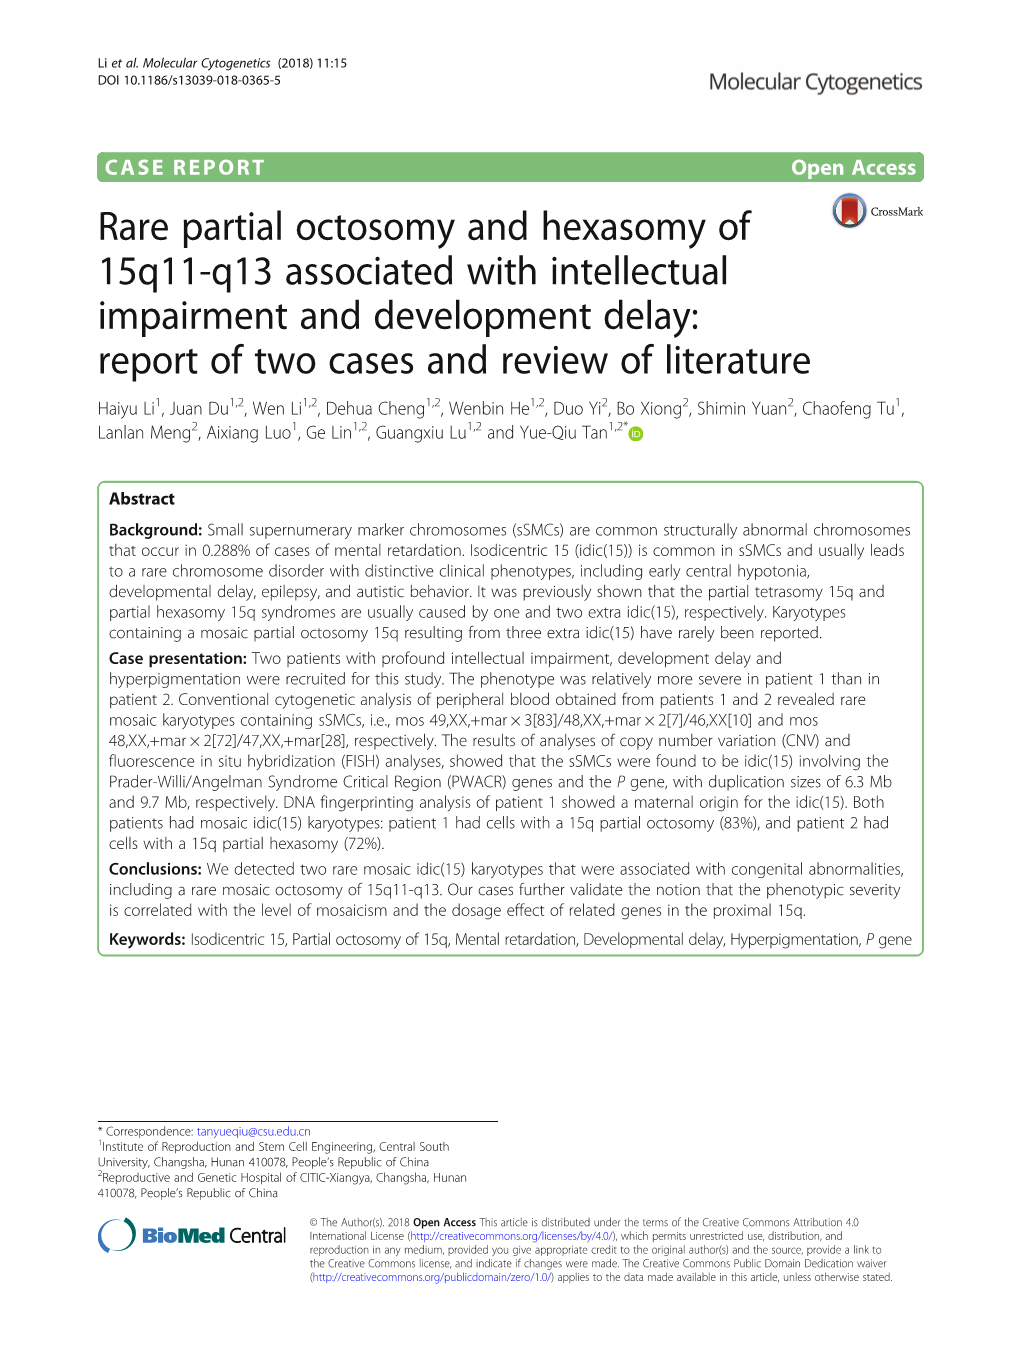 Rare Partial Octosomy and Hexasomy of 15Q11-Q13 Associated With